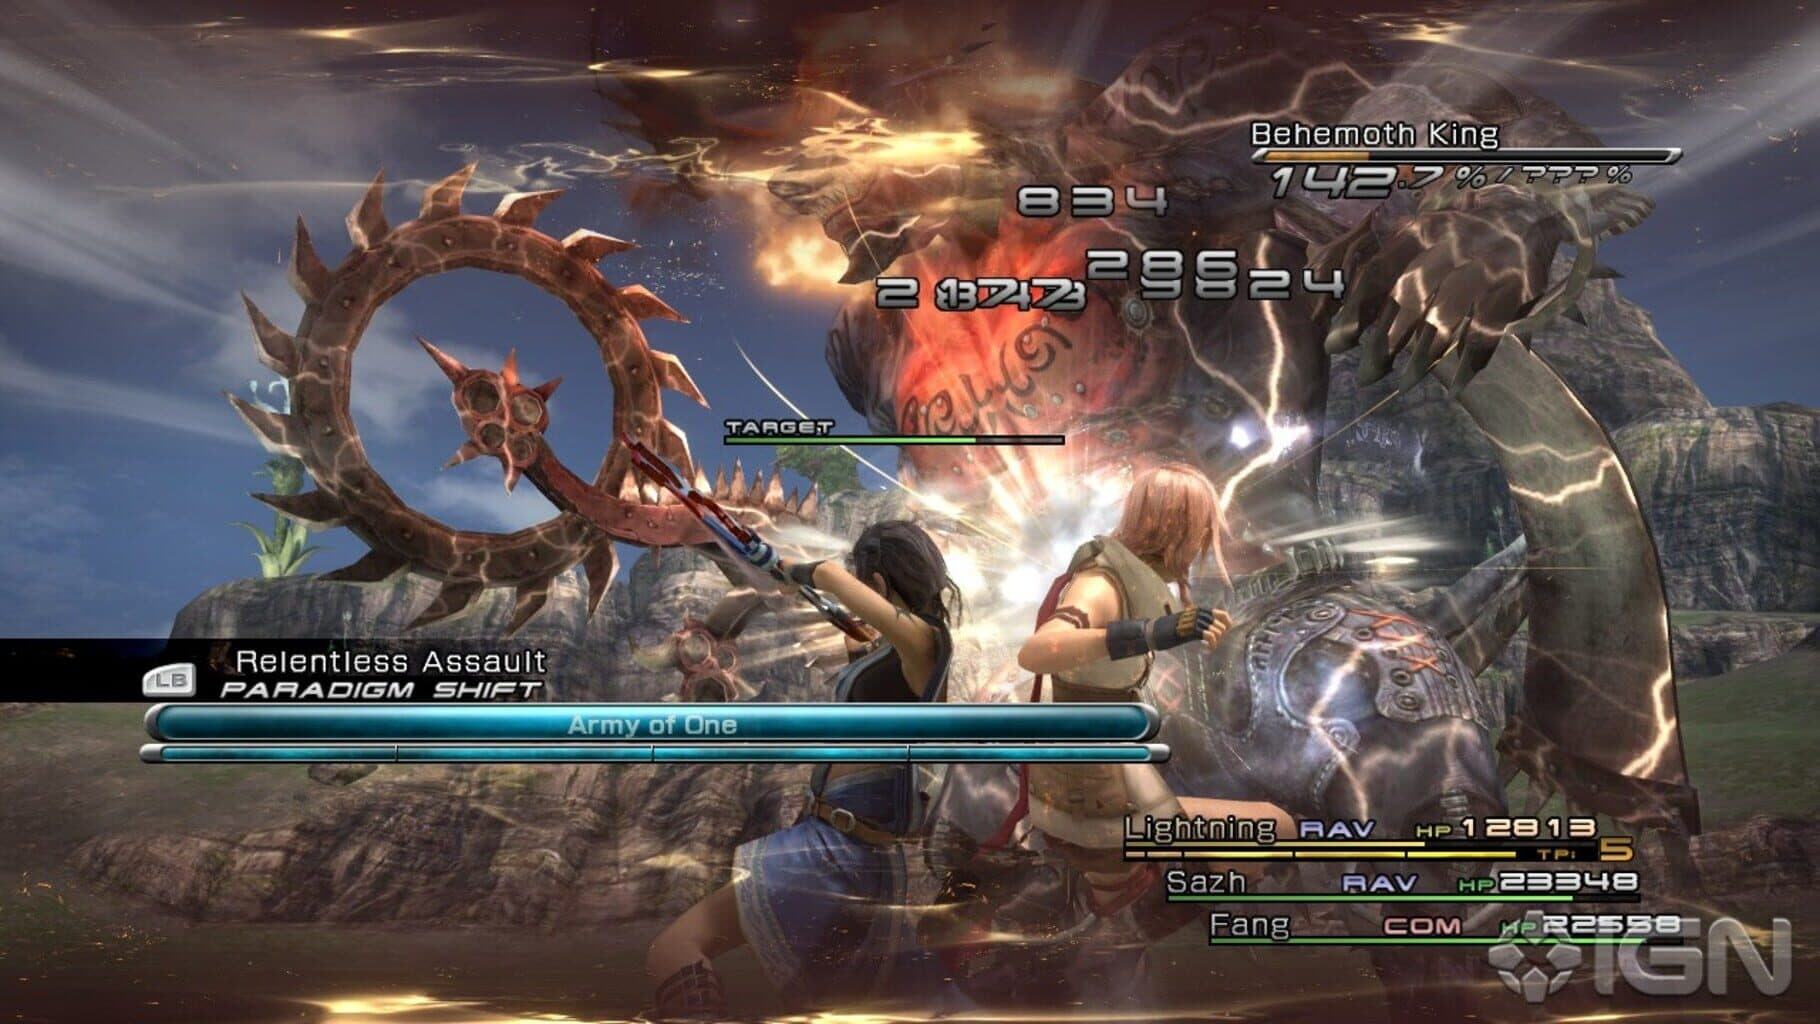 Final Fantasy XIII Image